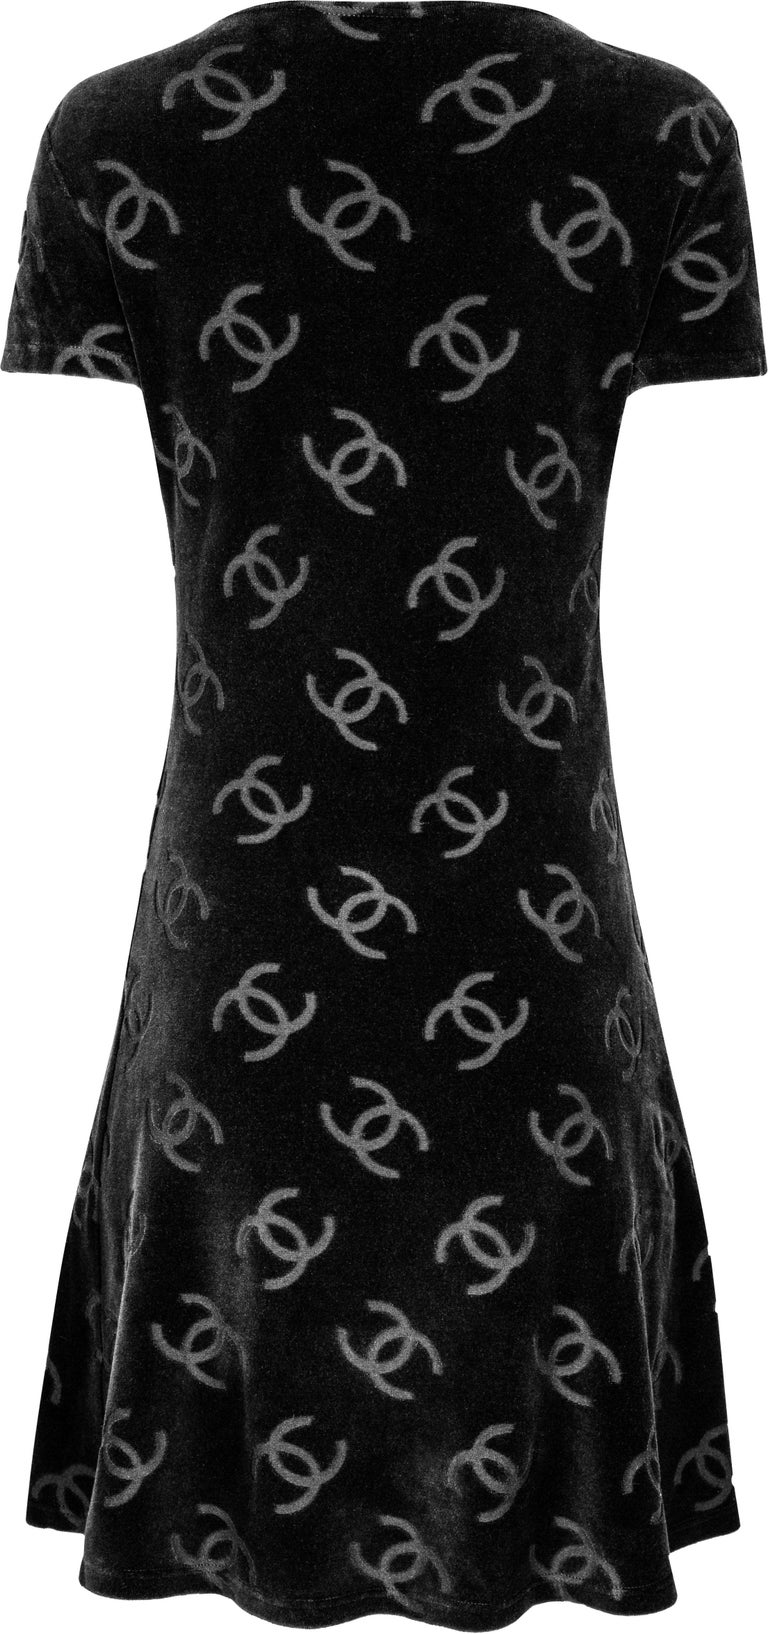 S/S 1992 Chanel Karl Lagerfeld Black Plunging Peplum Backless Mini Dress